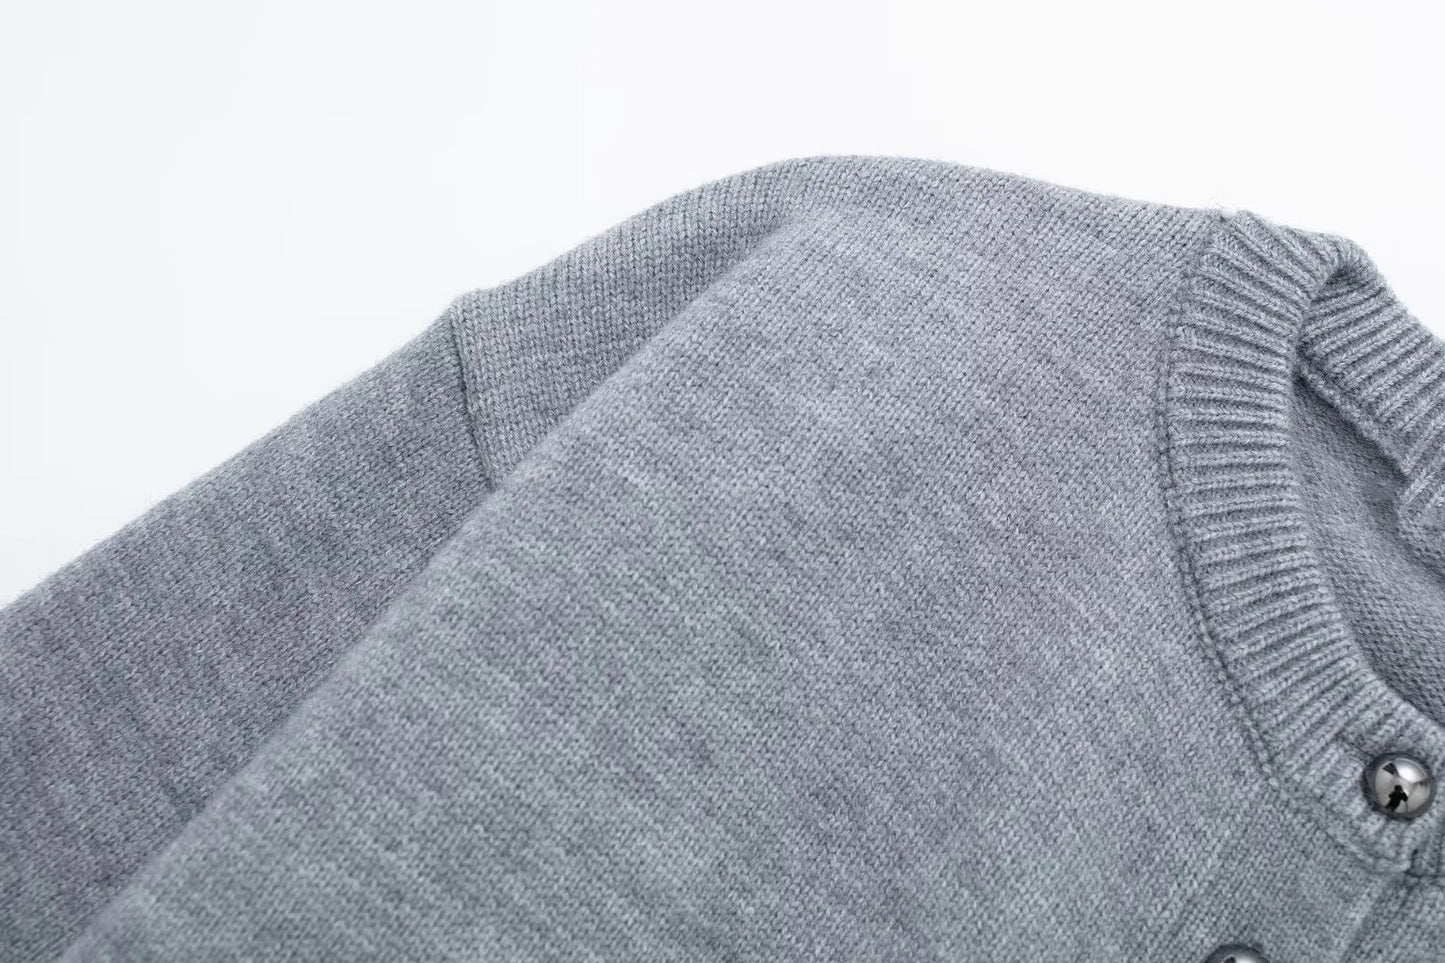 Gray High Waist Knitted Coat: Effortless Elegance from Eternal Gleams